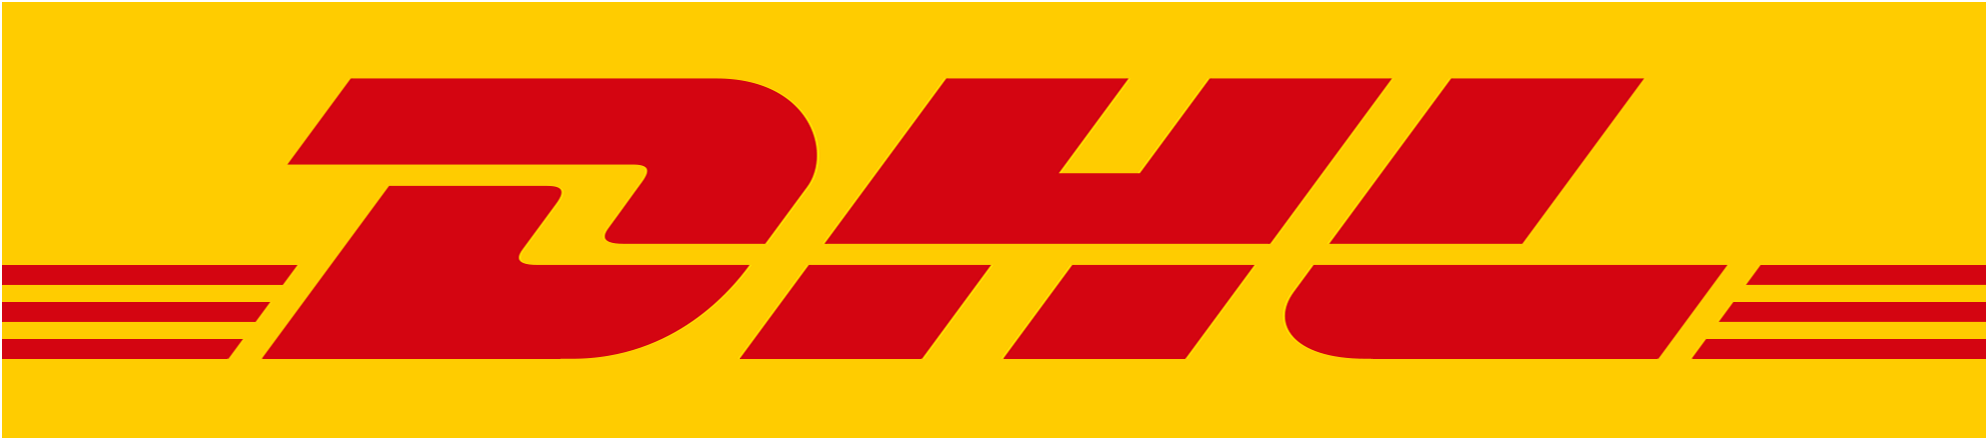 DHL Global Forwarding, China